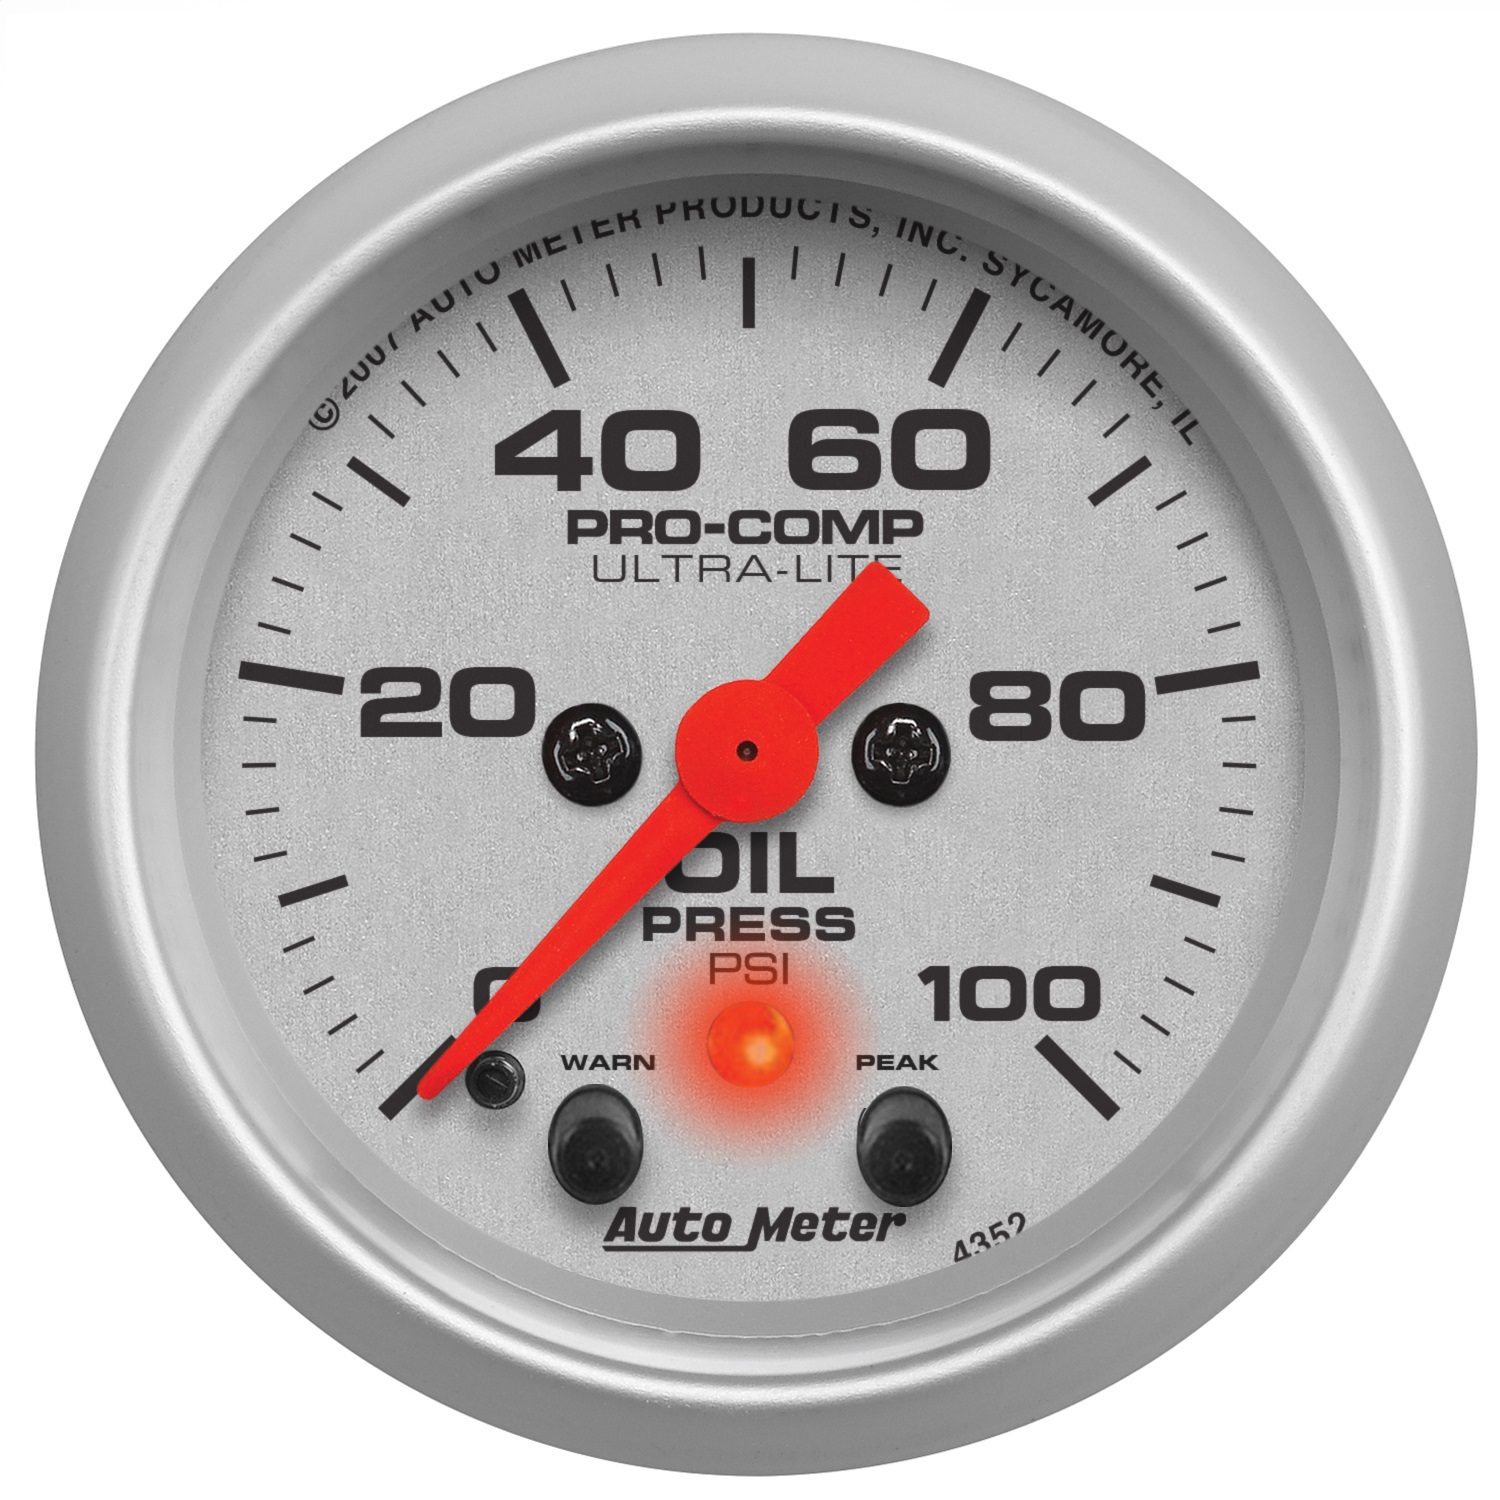 Auto Meter Auto Meter 4352 Ultra-Lite; Electric Oil Pressure Gauge